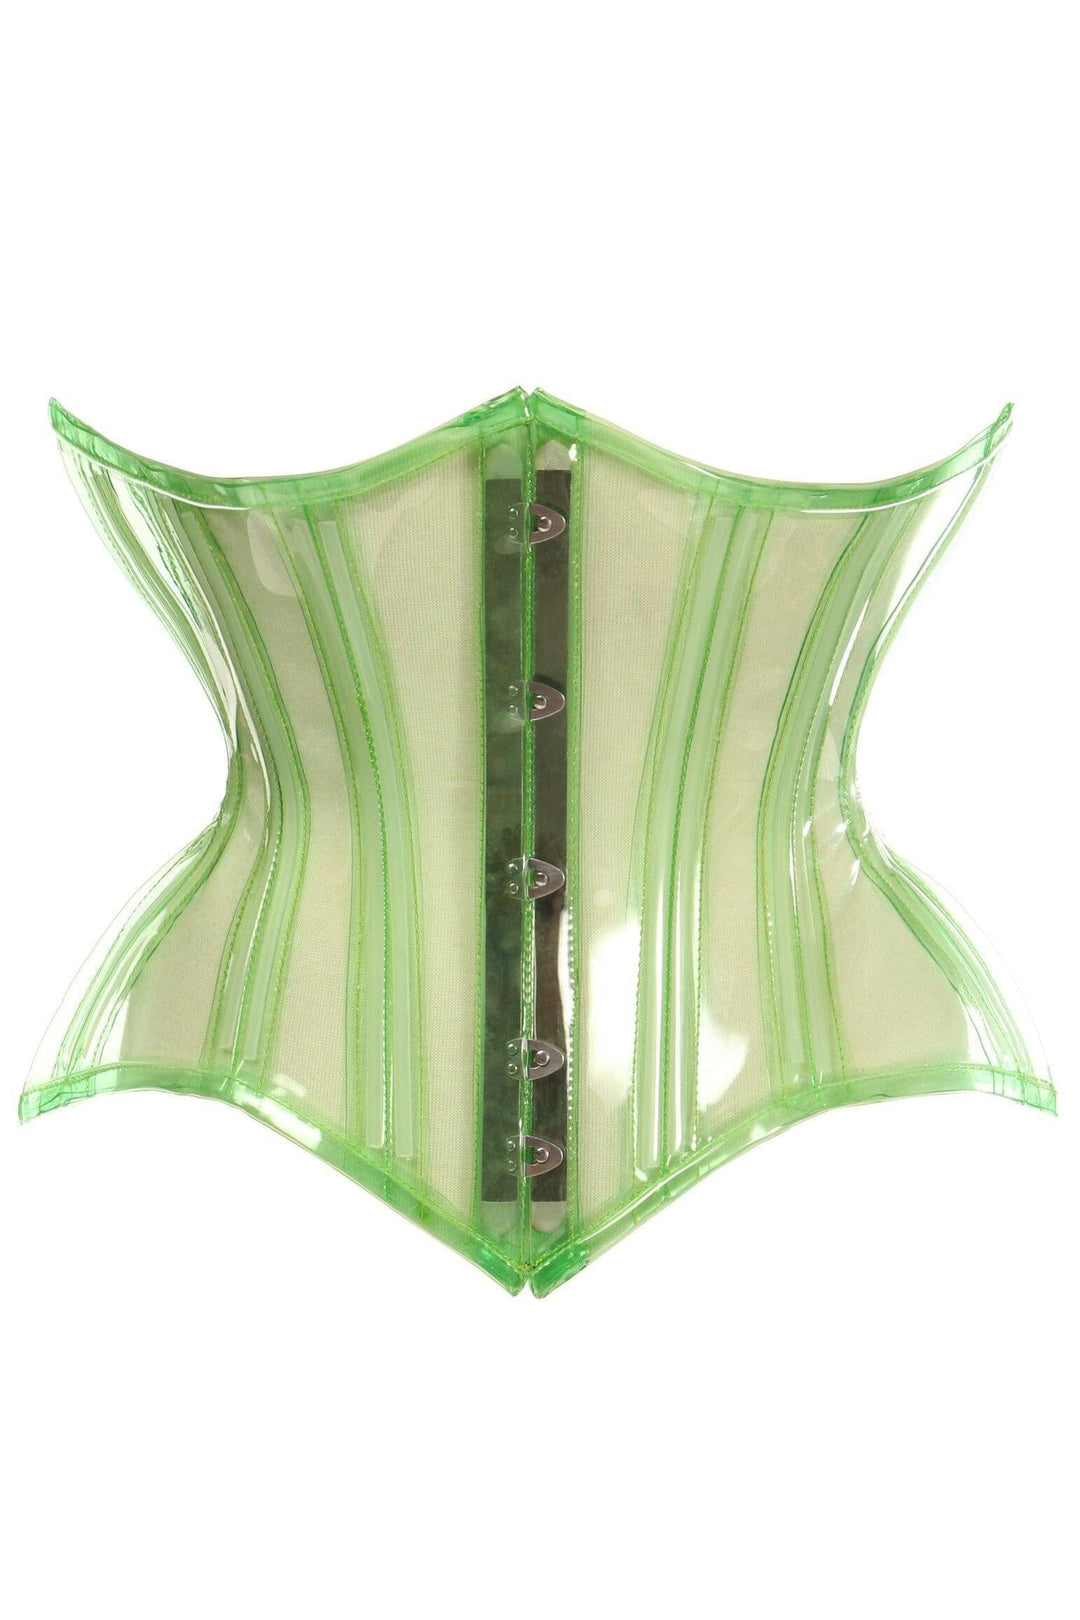 Green Clear Curvy Underbust Waist Cincher Corset-Devil Costumes-Daisy Corsets-Green-2X-SEXYSHOES.COM